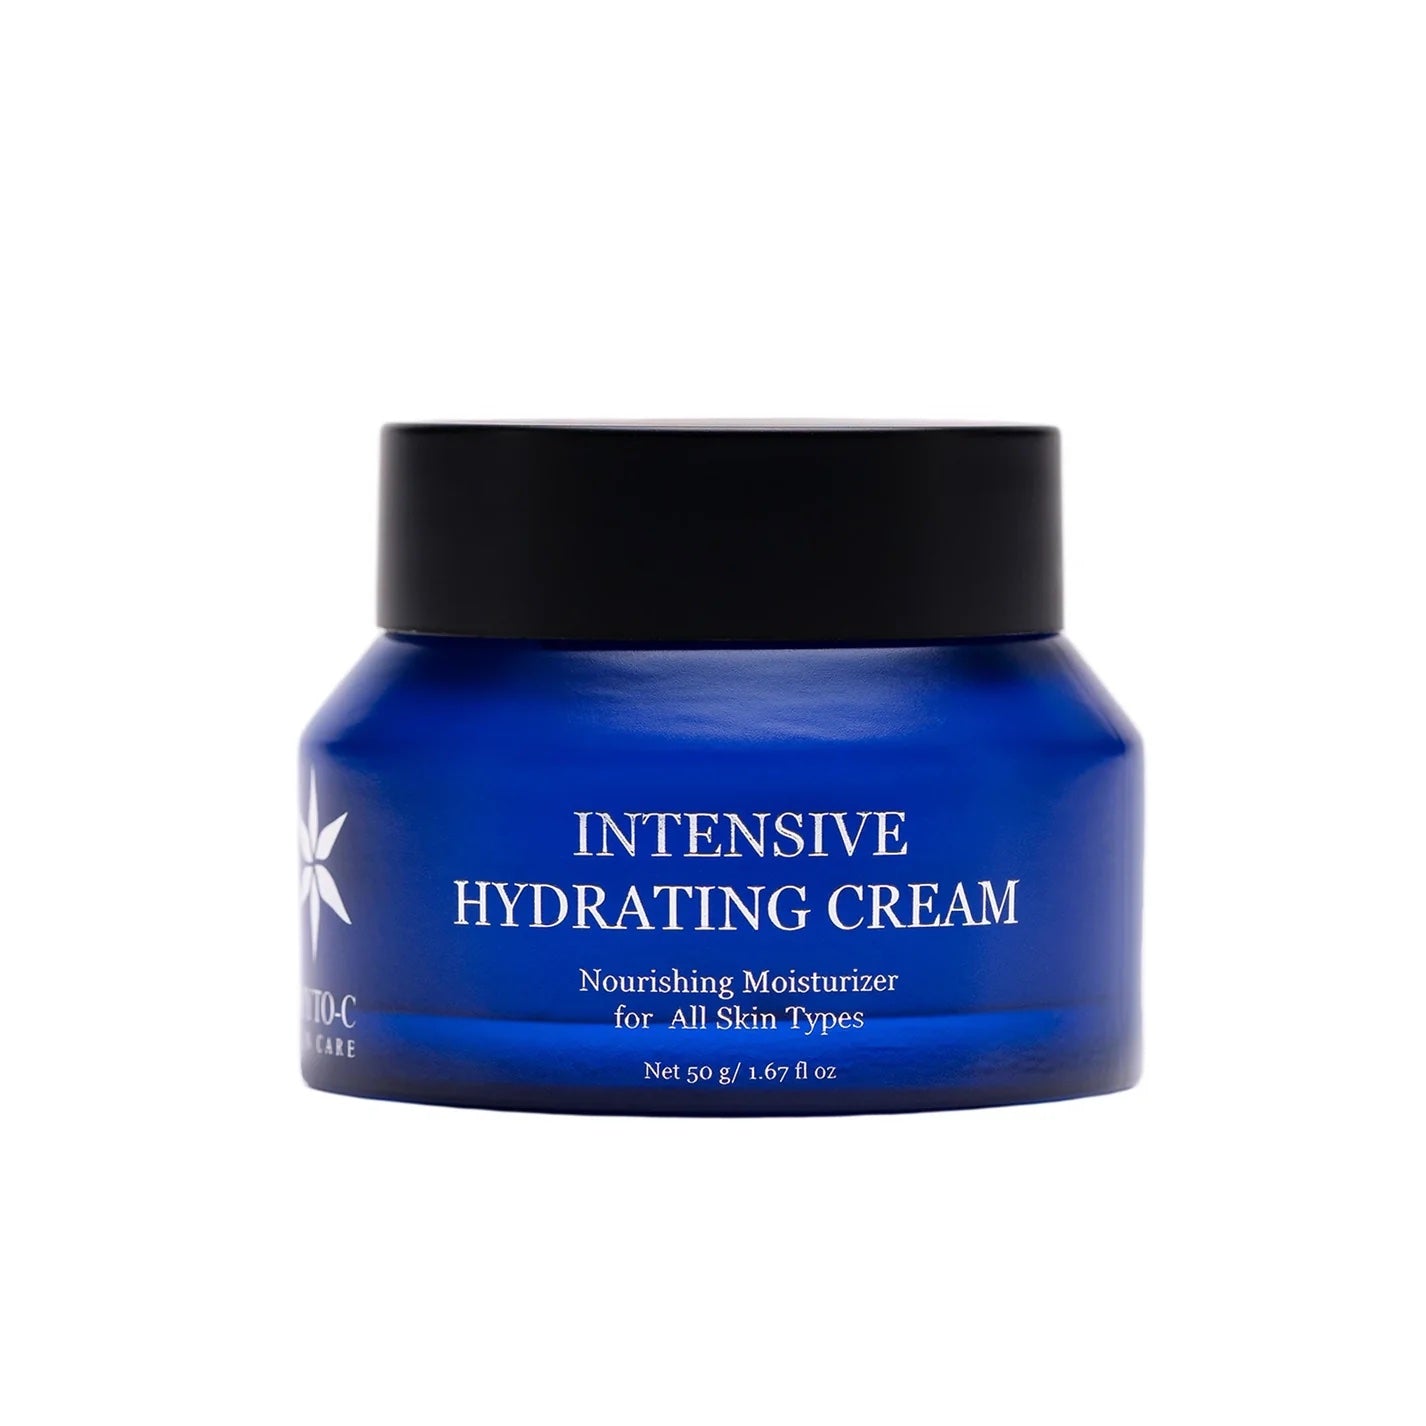 PHYTO-C 強效保濕霜 | Intensive Hydrating Cream 50g